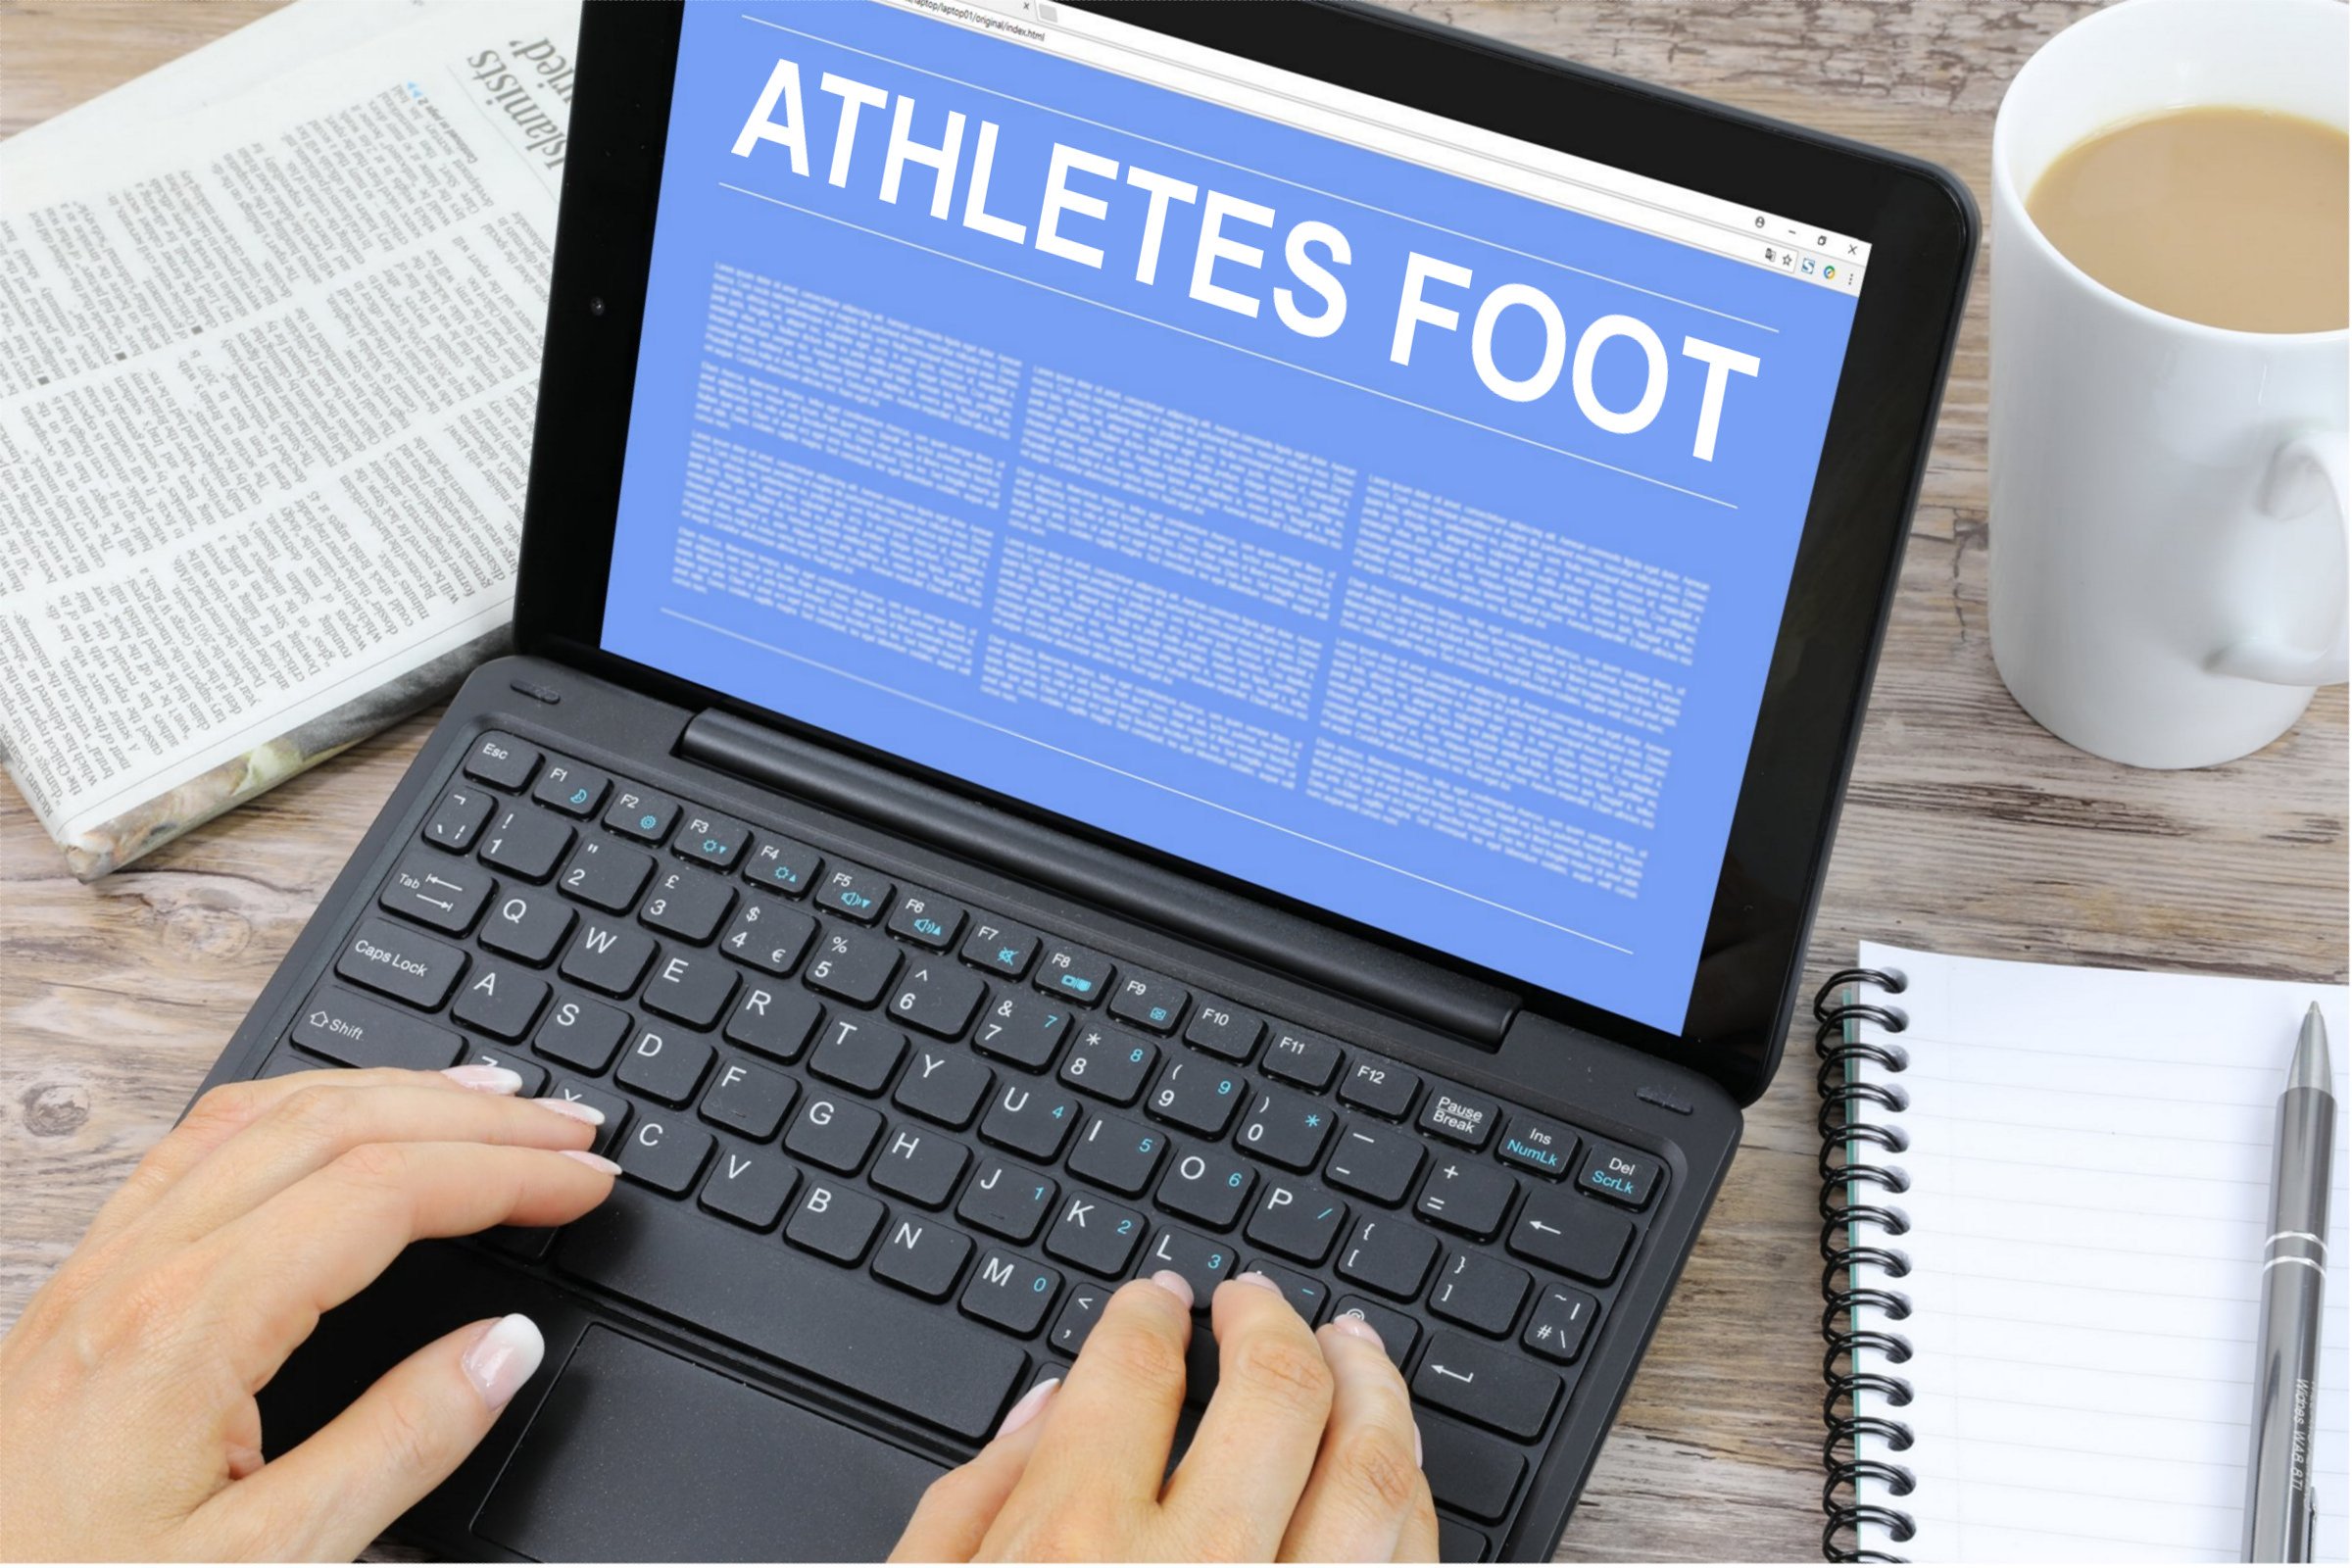 Athletes Foot